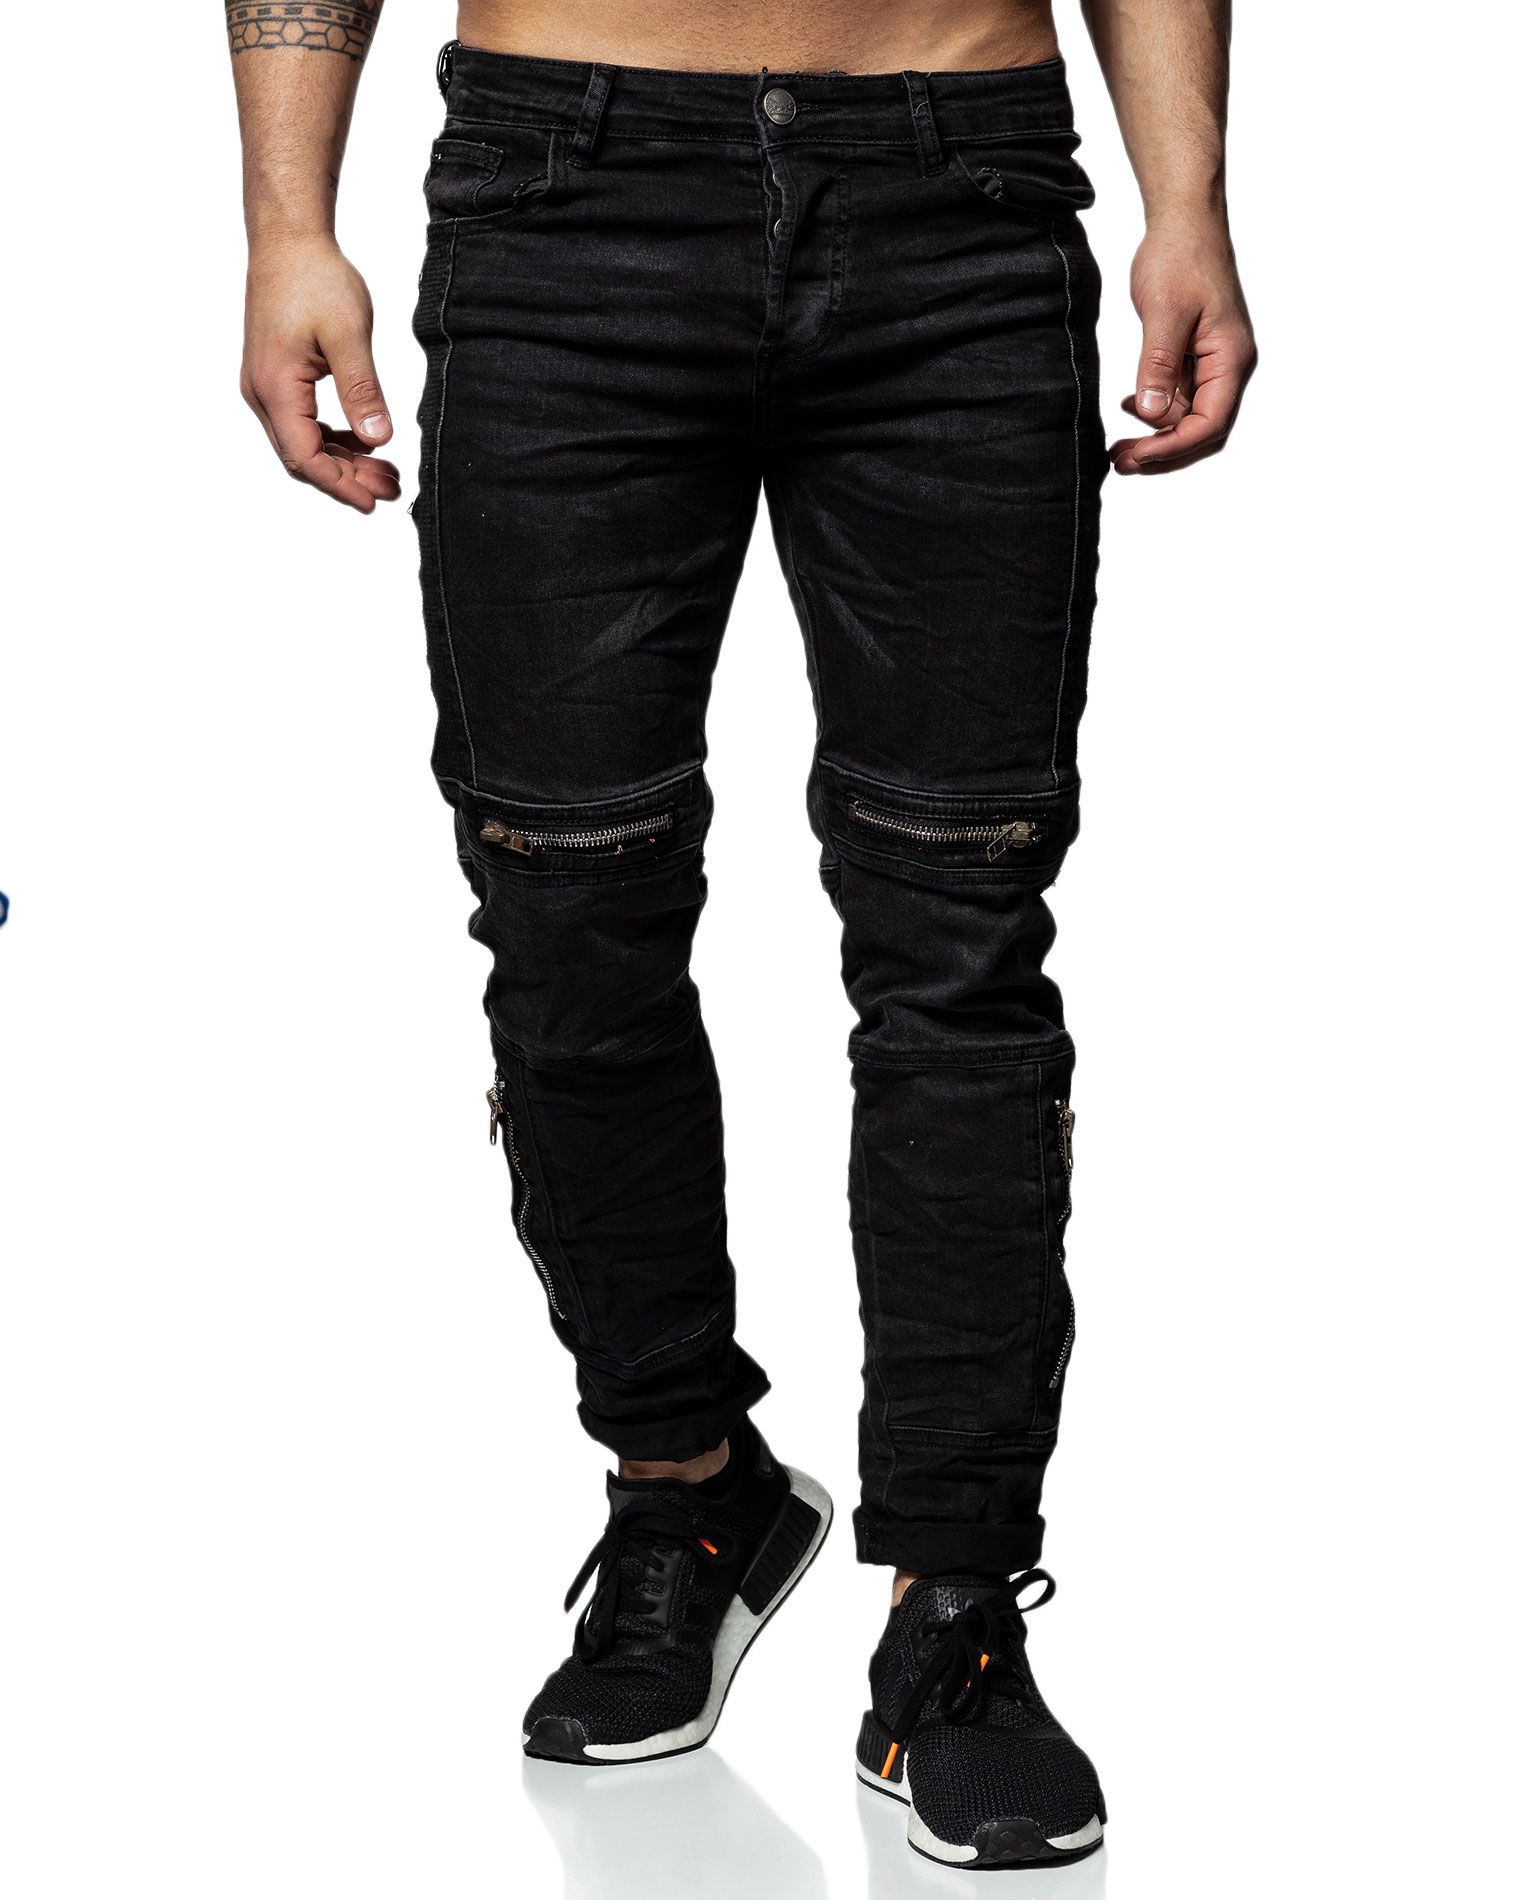 Zipper Dark Jeans L32 Jerone - 1235 - Jeans - Jerone.com